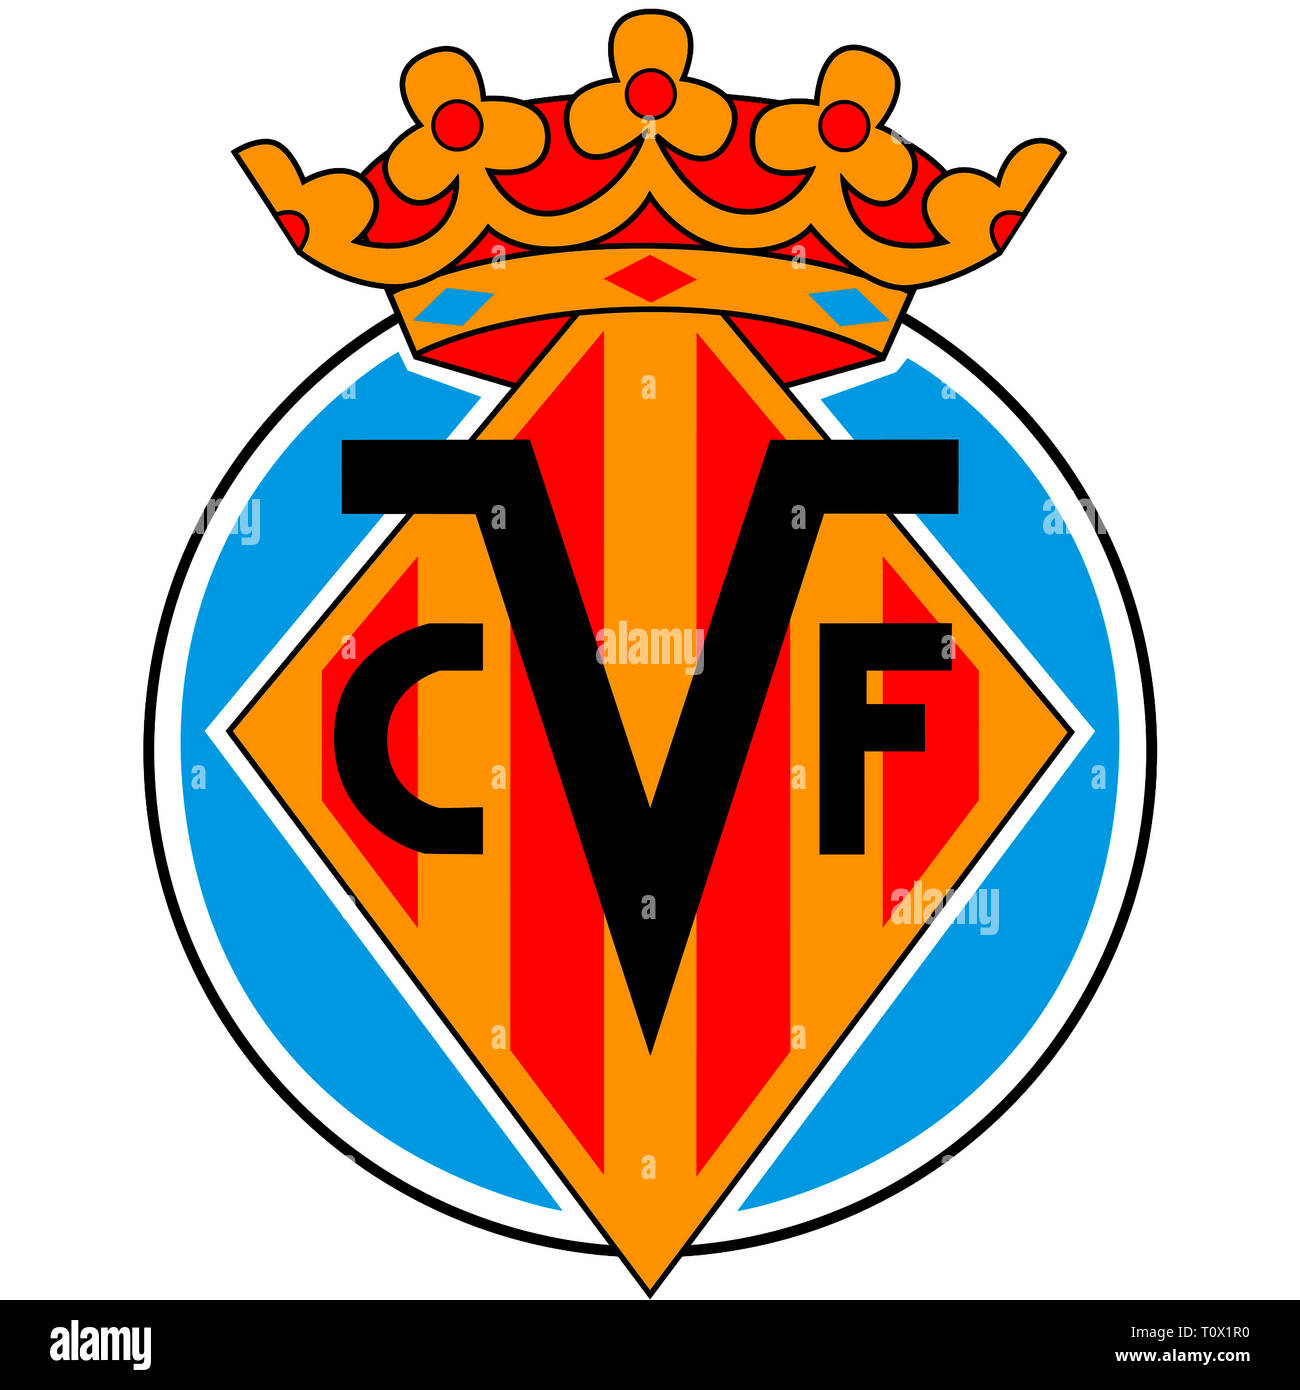 Logo of Spanish football team Villarreal CF - Spain Stock Photo - Alamy